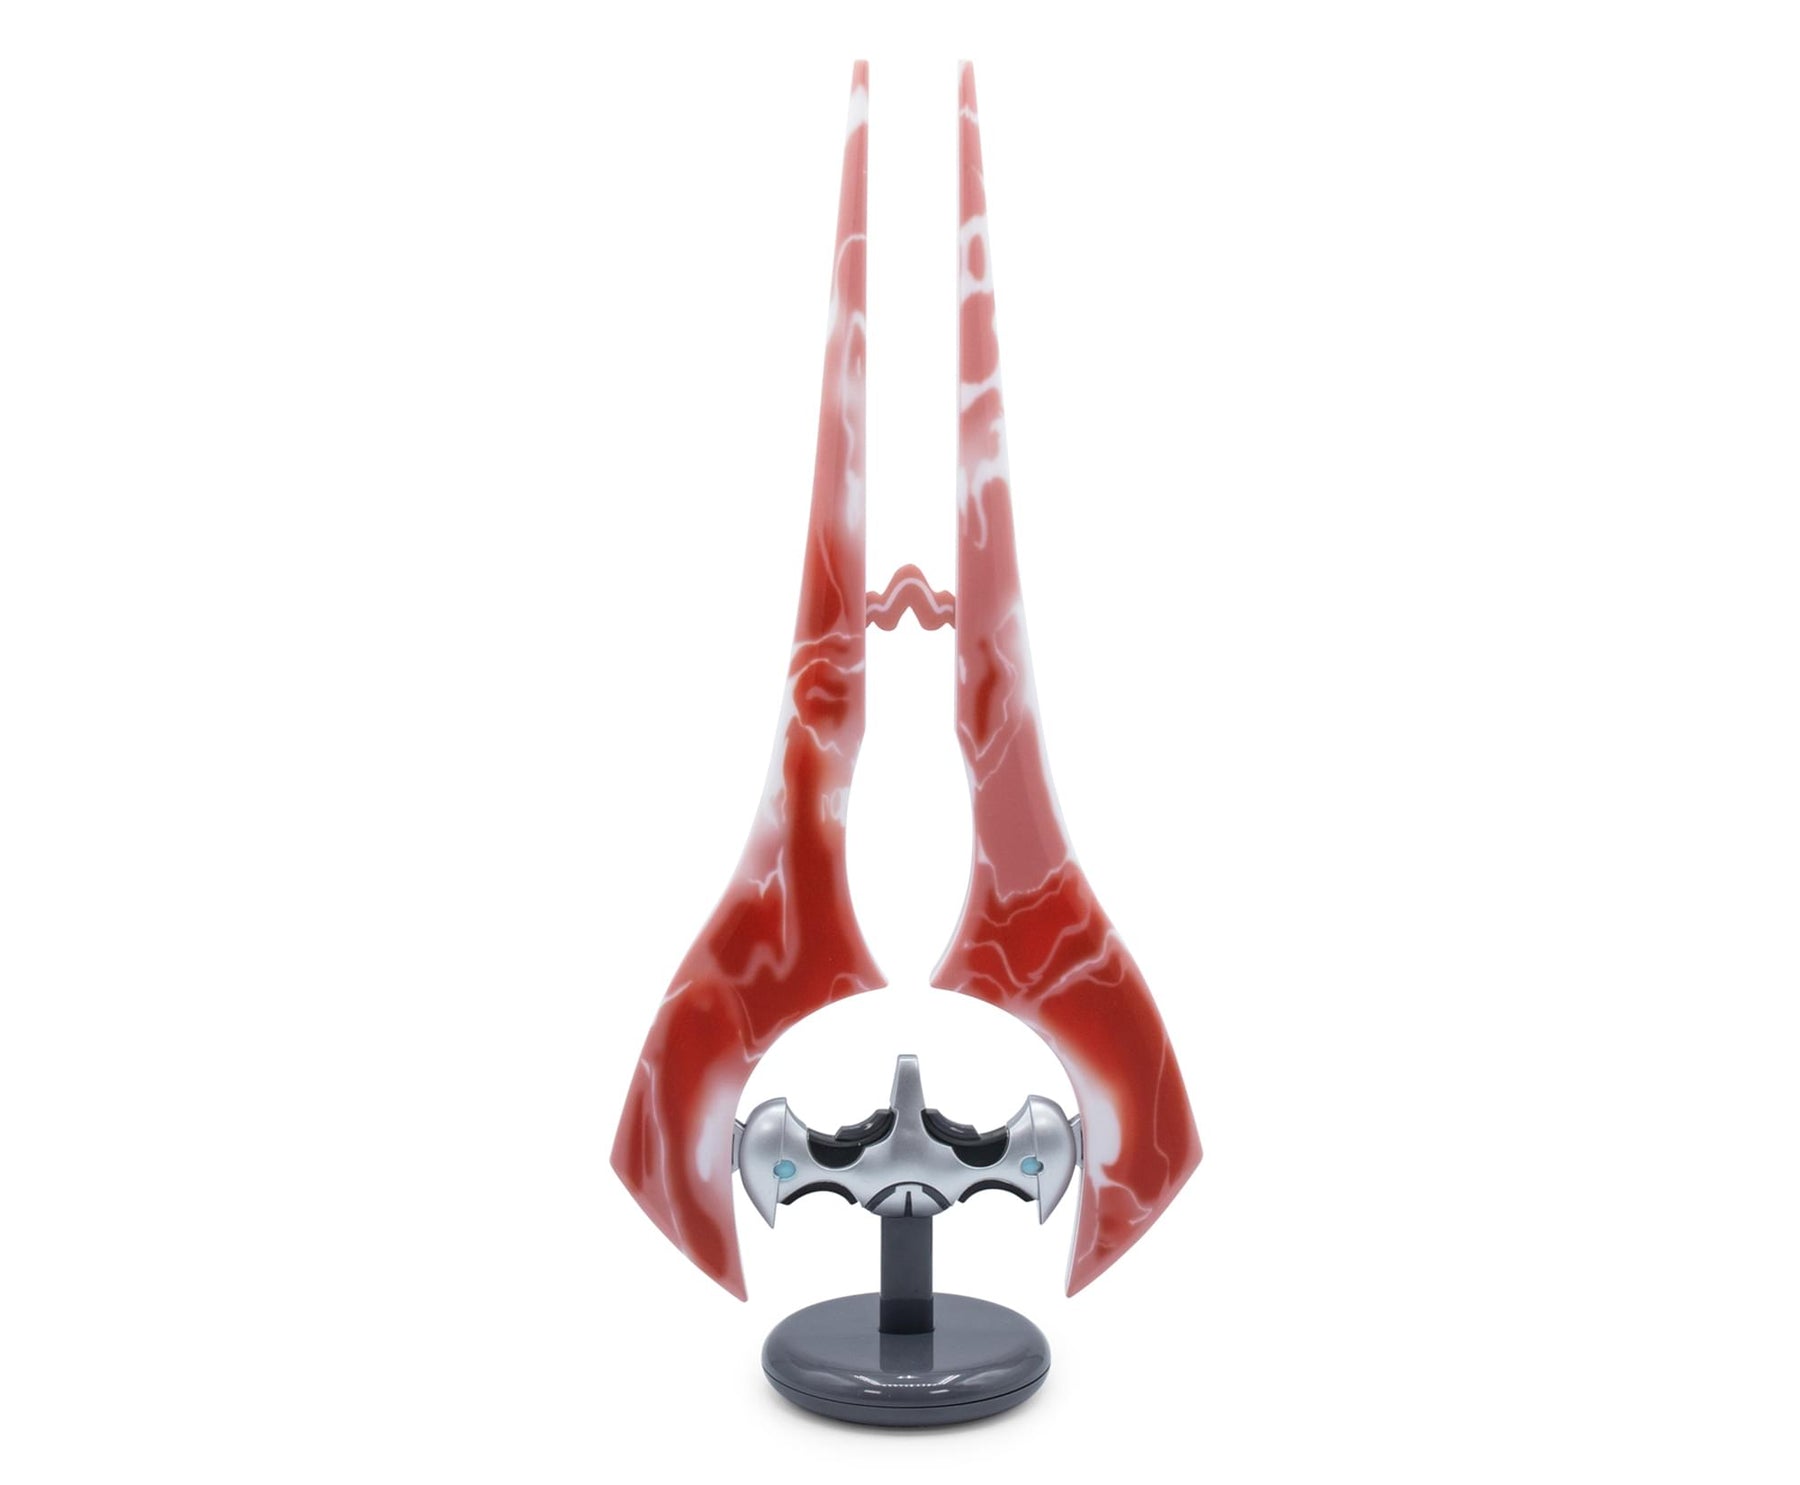 Halo Infinite Red Energy Sword Bloodblade Replica Mood Light | Toynk Exclusive